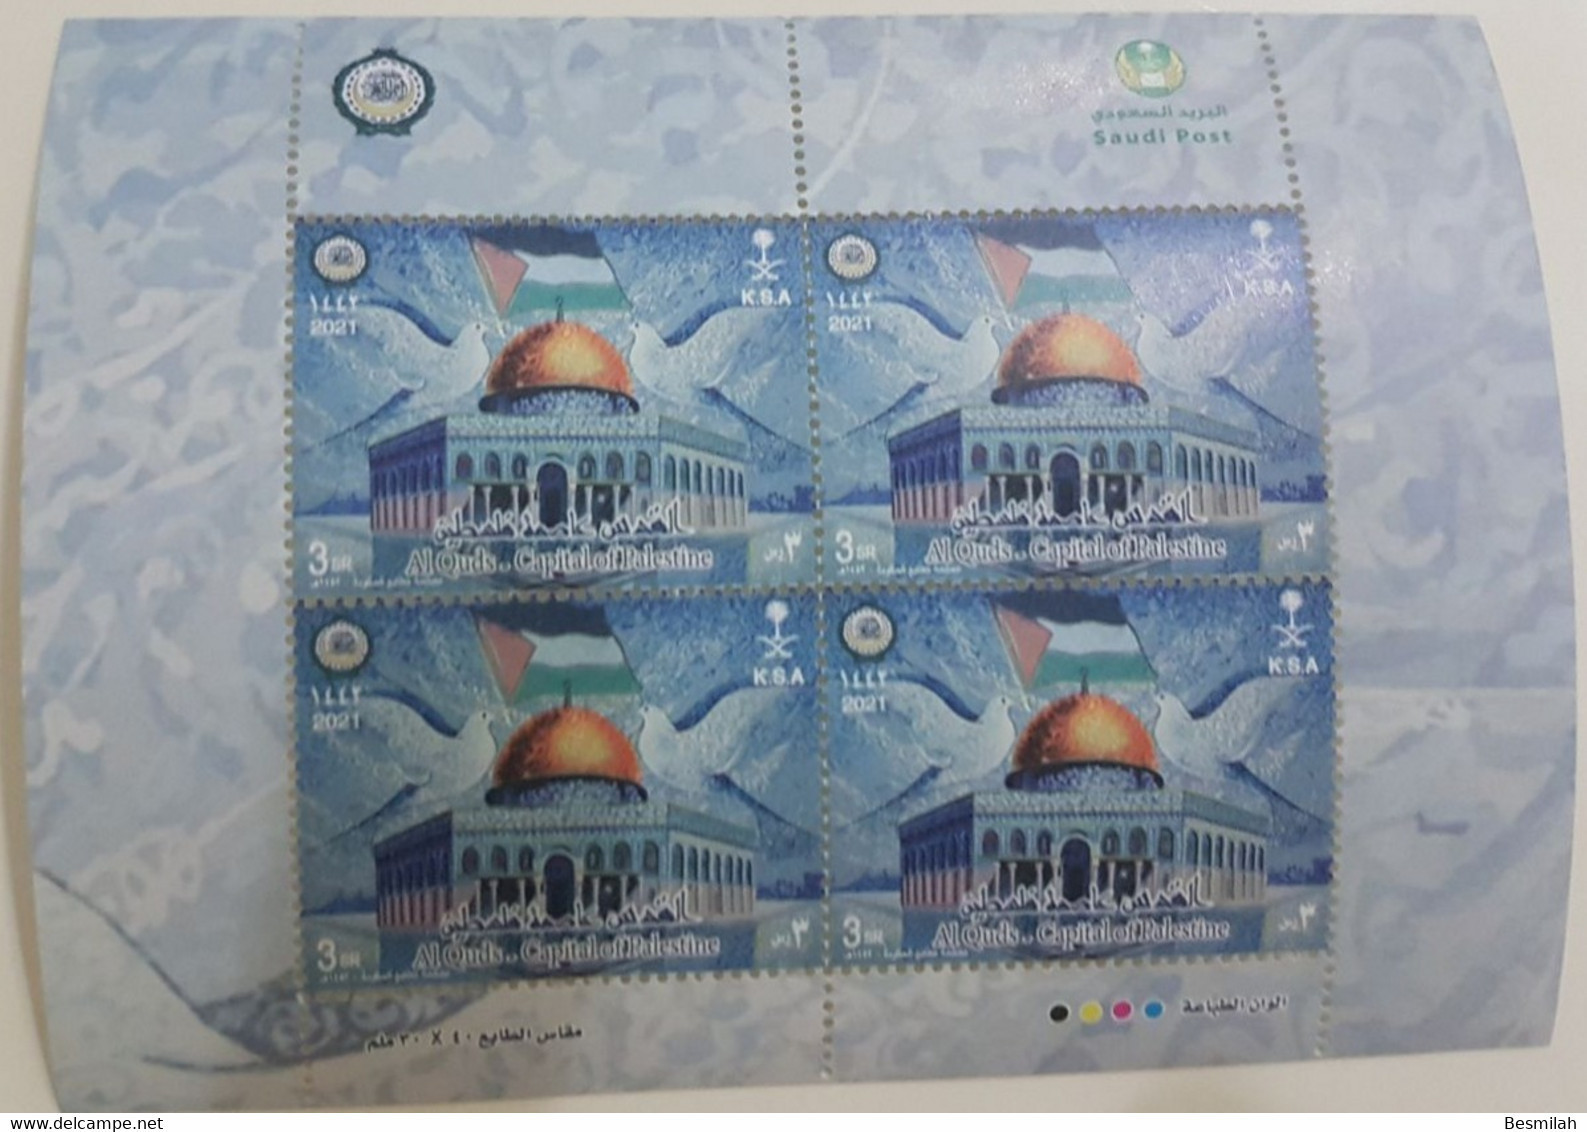 Saudi Arabia Stamp Alquds Capital Of Palestine 2021 (1442 Hijry) 4 Pieces Of 3 Riyals Plus First Day Version Cover Envel - Arabia Saudita